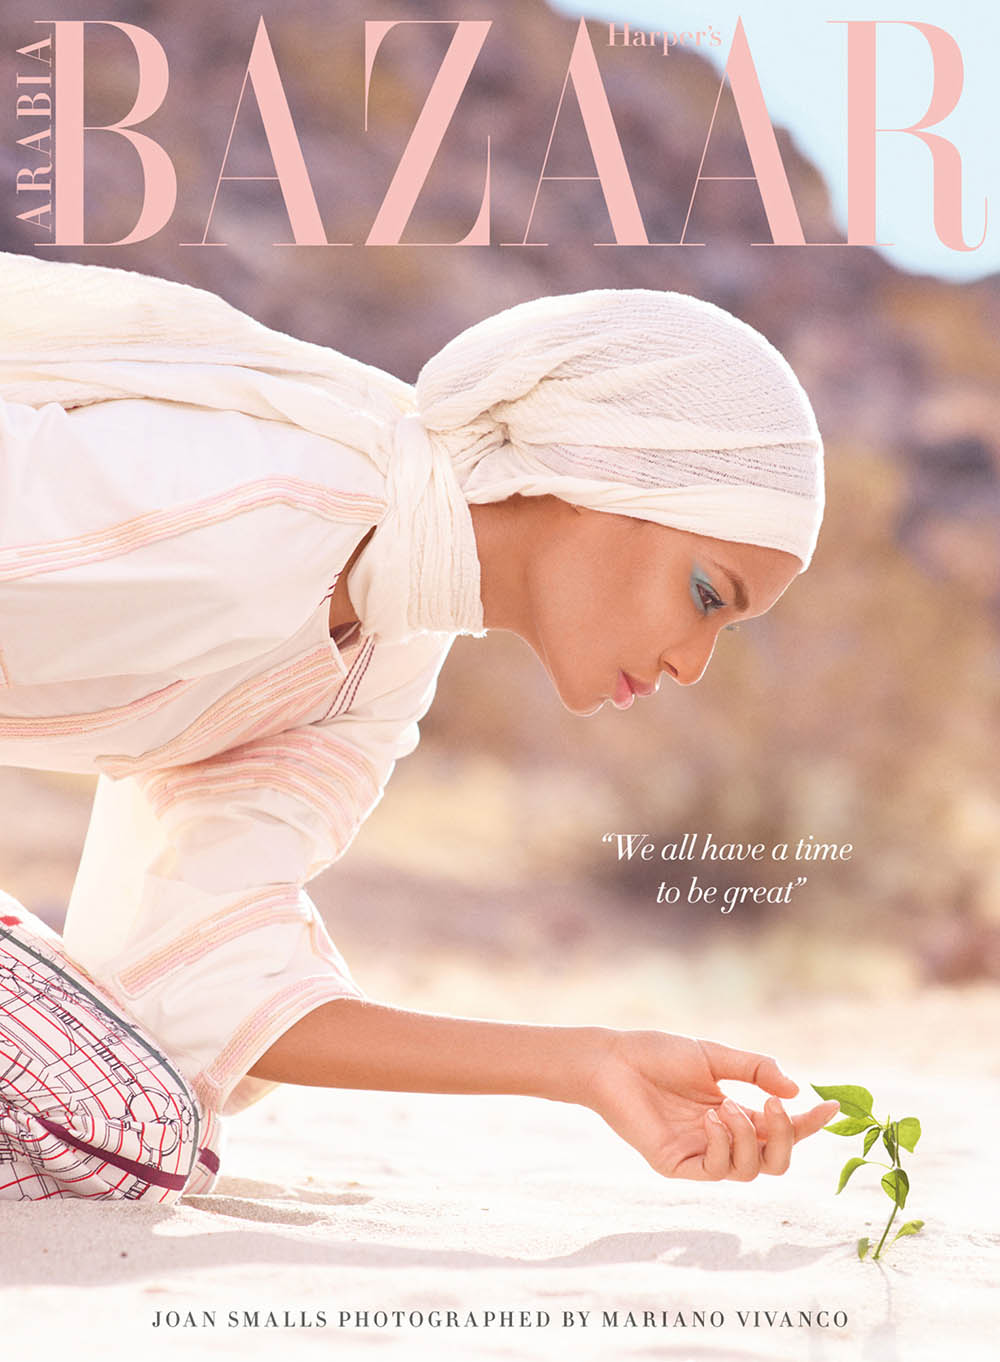 Joan Smalls covers Harper’s Bazaar Arabia March 2018 by Mariano Vivanco